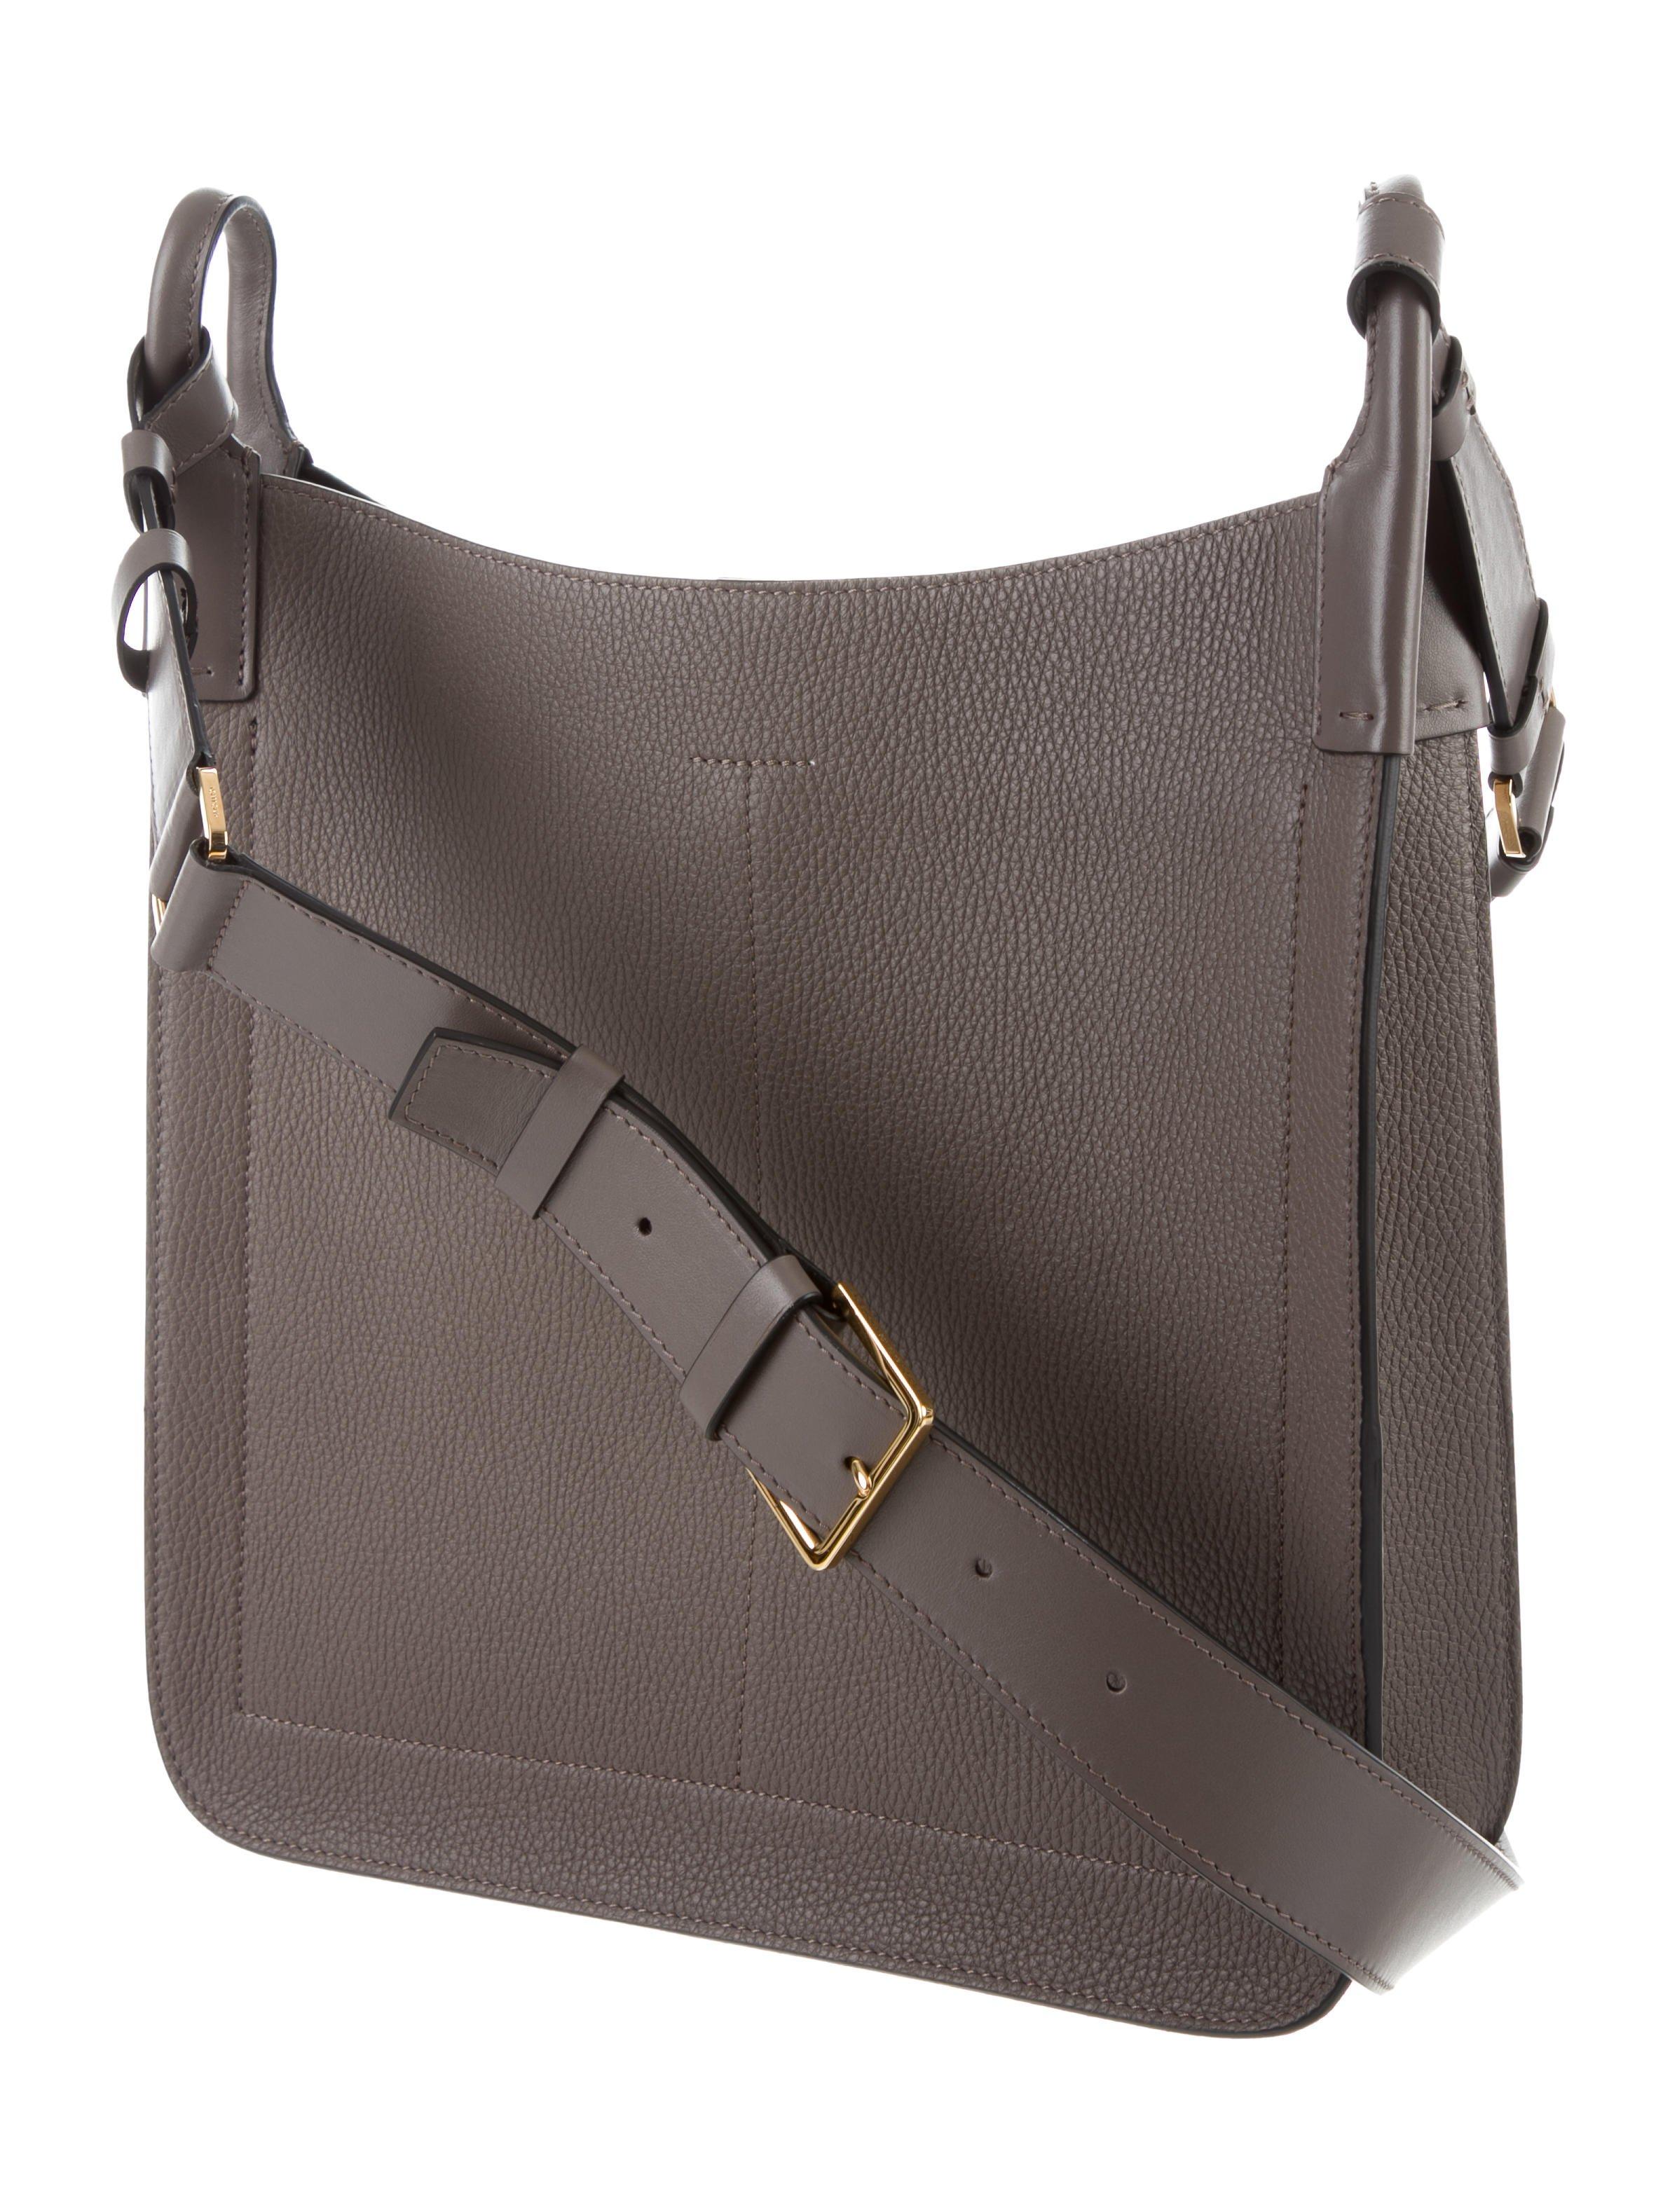 Black Tom Ford NEW Leather Carryall Men's Women's Travel Shoulder Crossbody Flap Bag